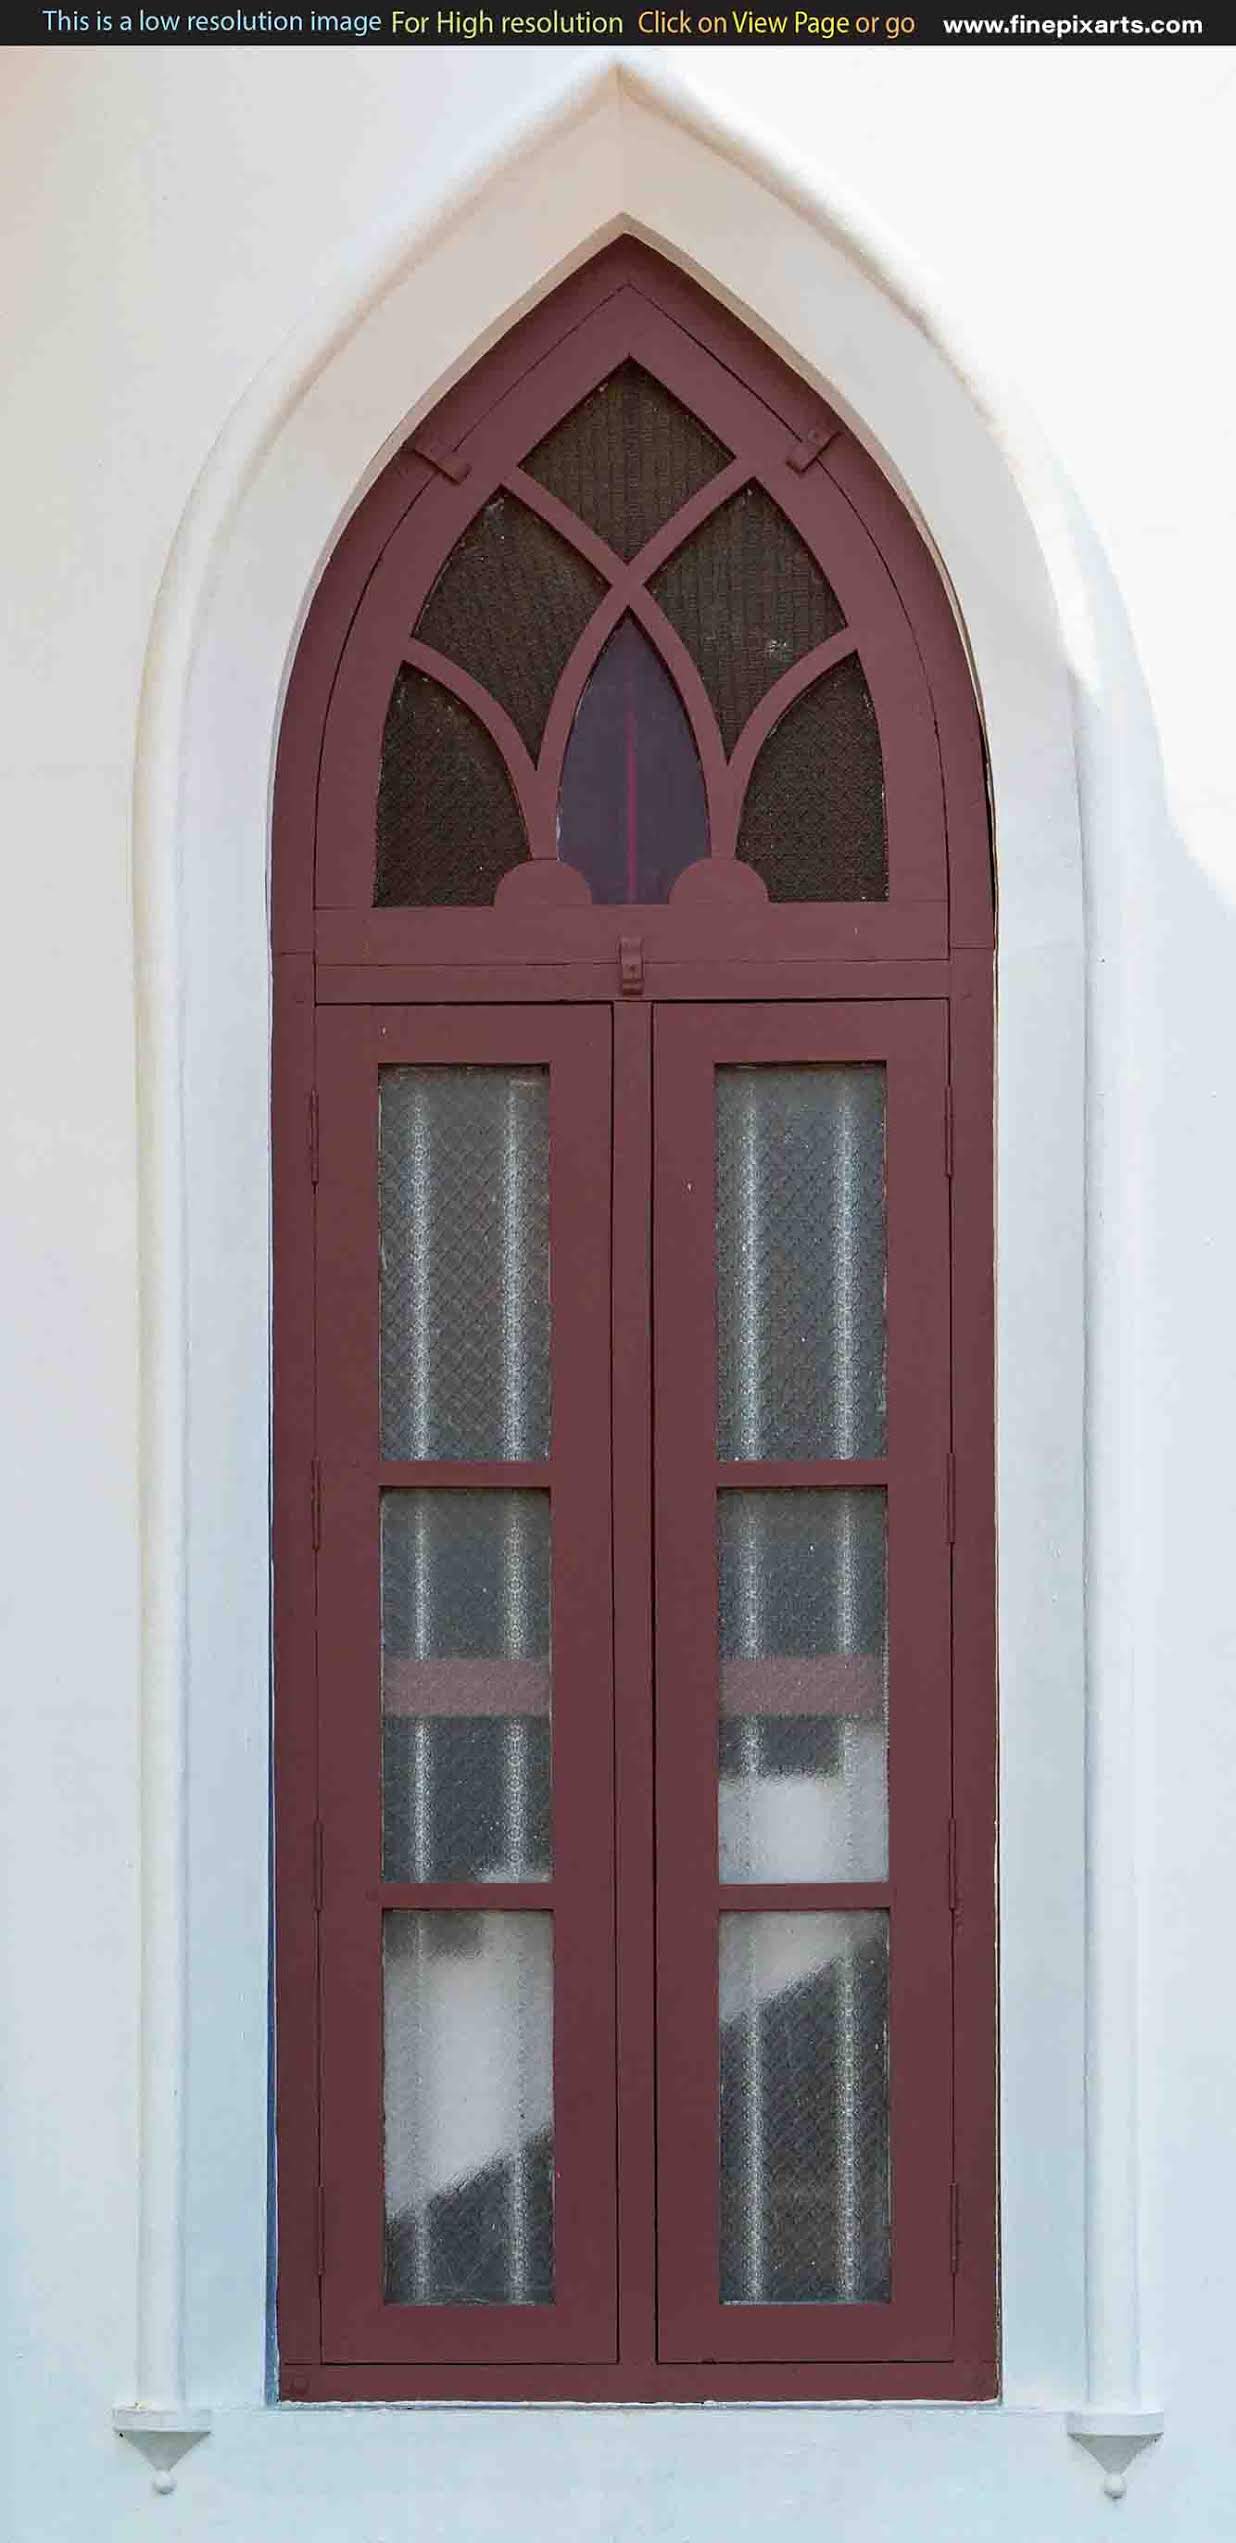 Gothic Window texture 00002